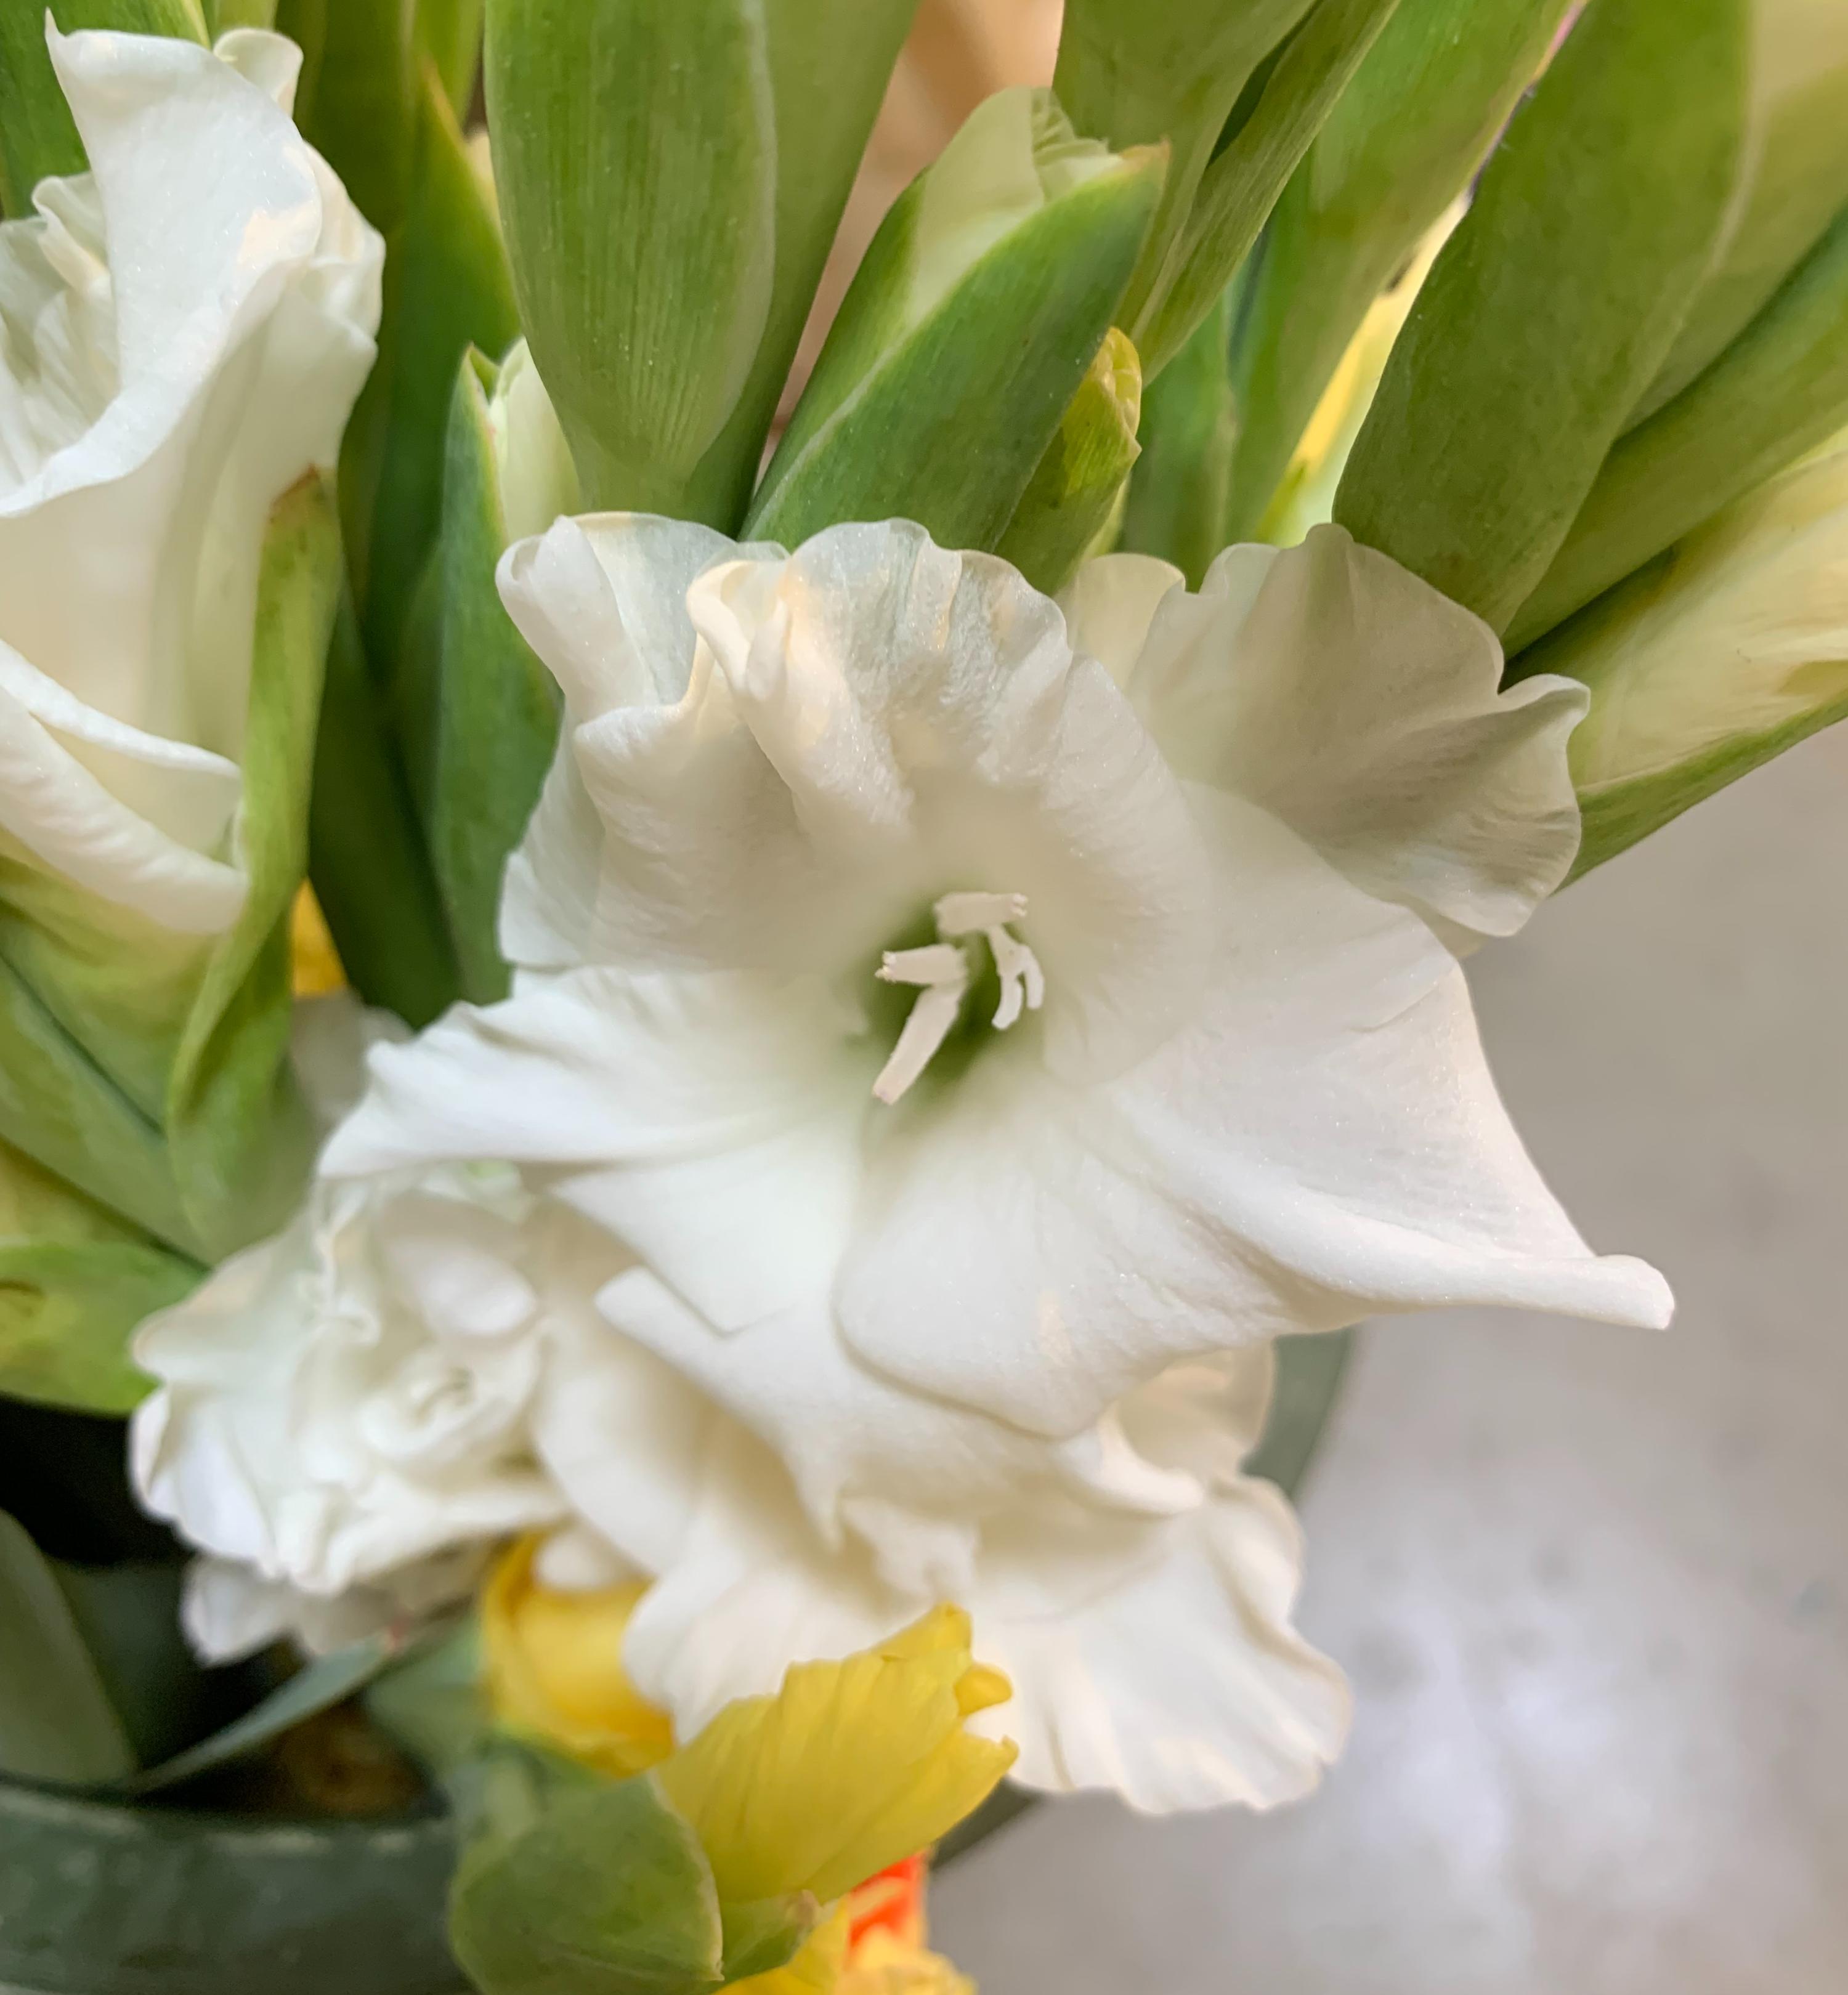 Gladiolus 'White Prosperity' - Large Flowering Glad from Leo Berbee Bulb Company